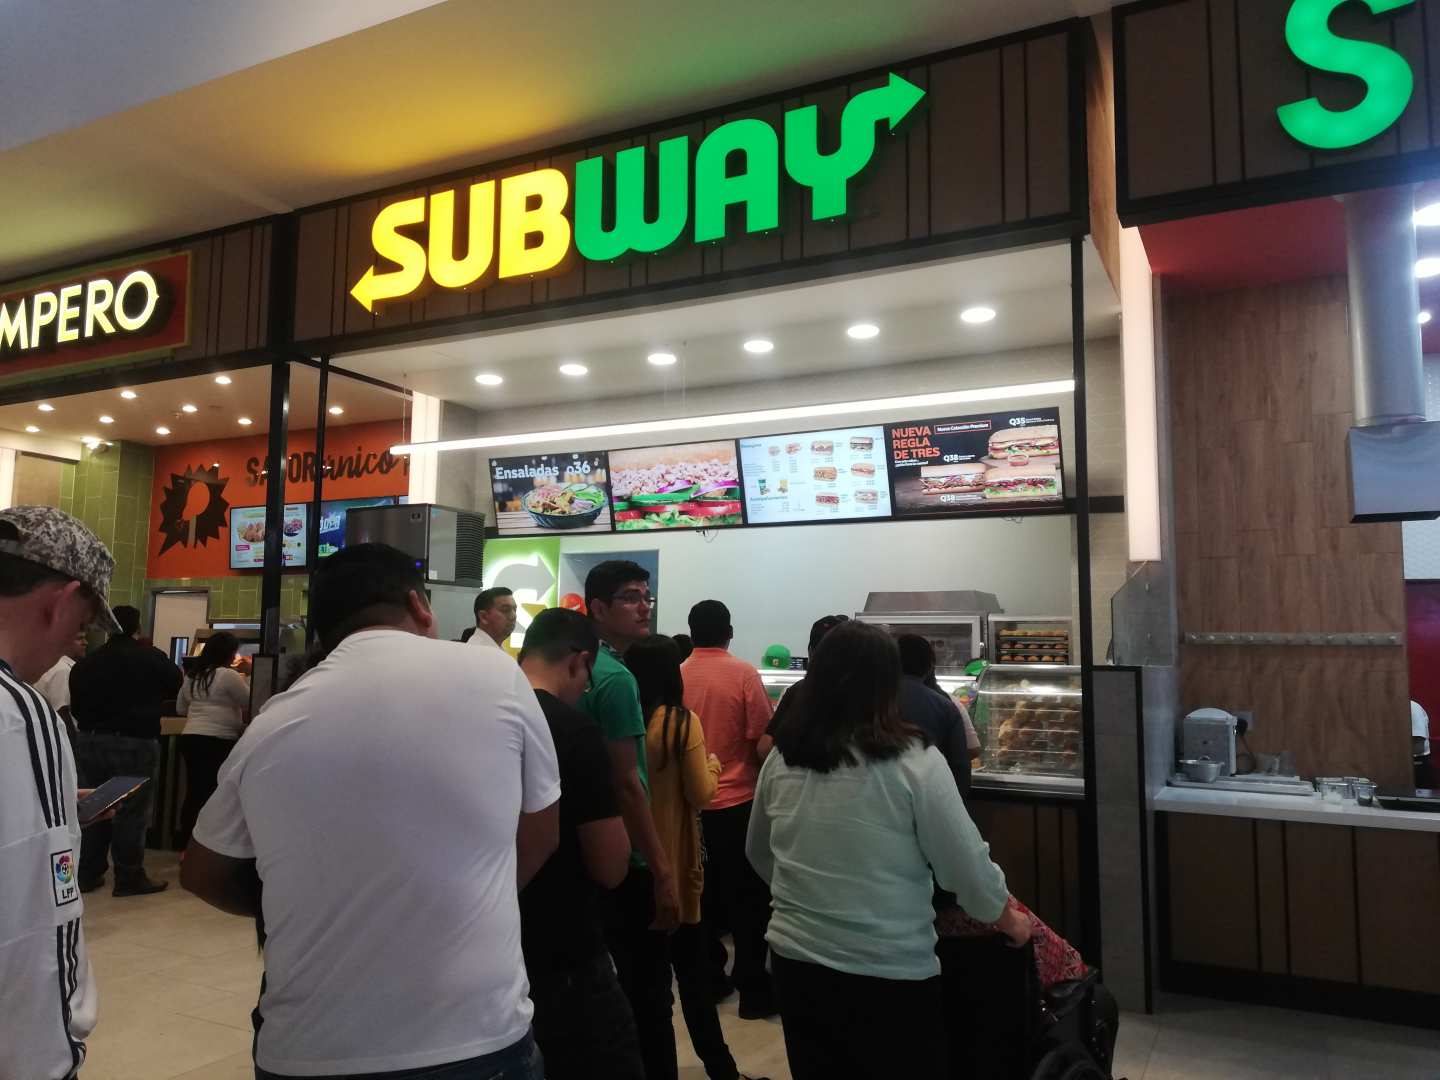 Subway (Pradera Vistares)